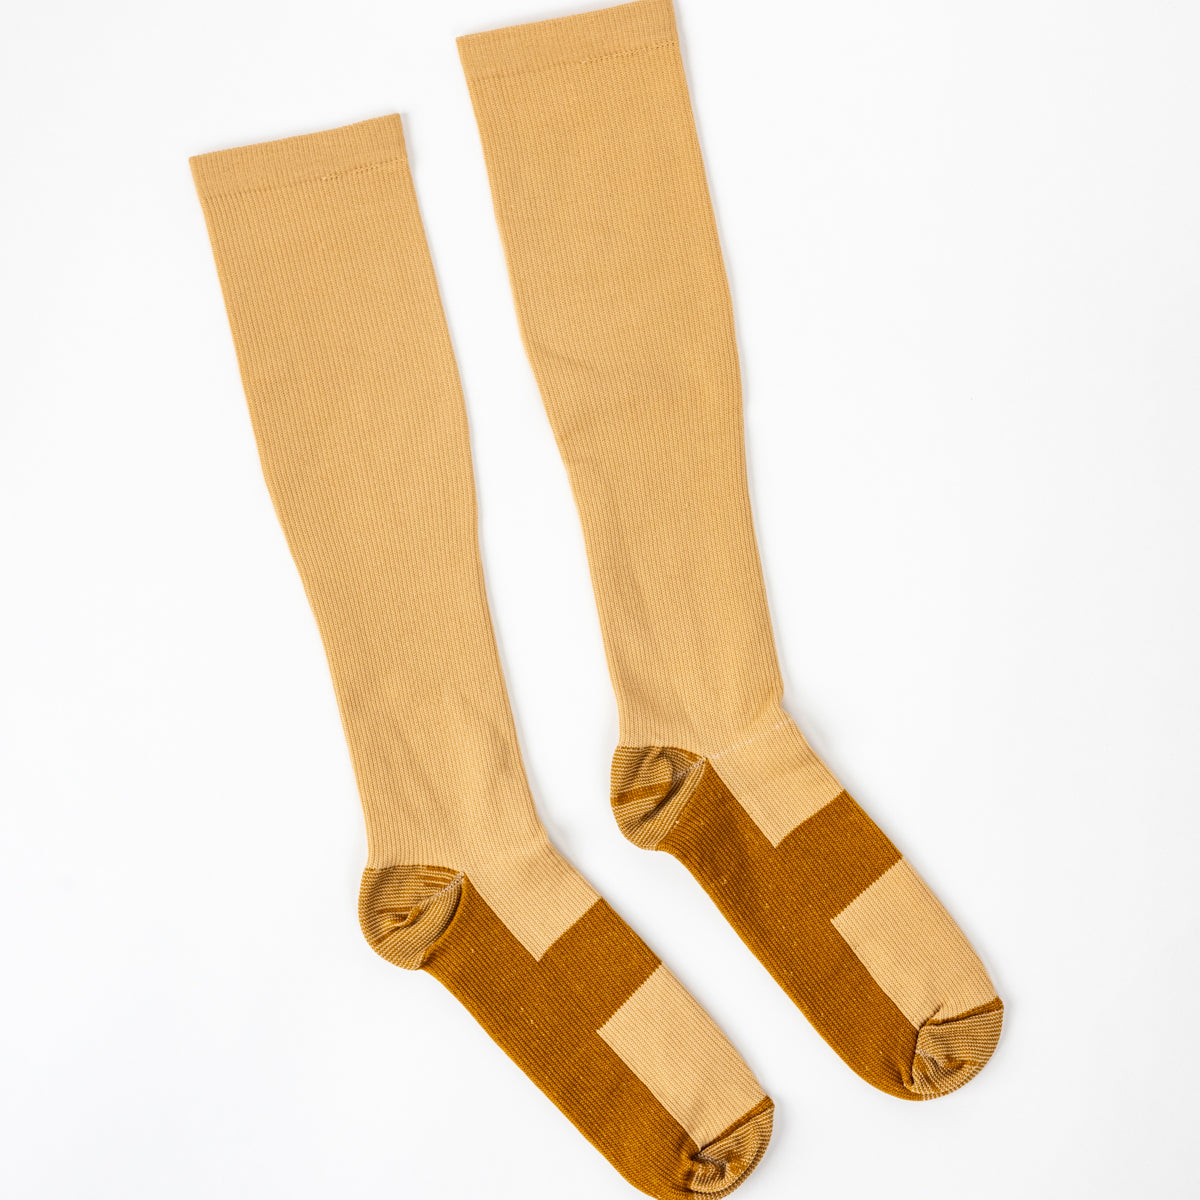 Natural Skin Copper Infused Compression Socks